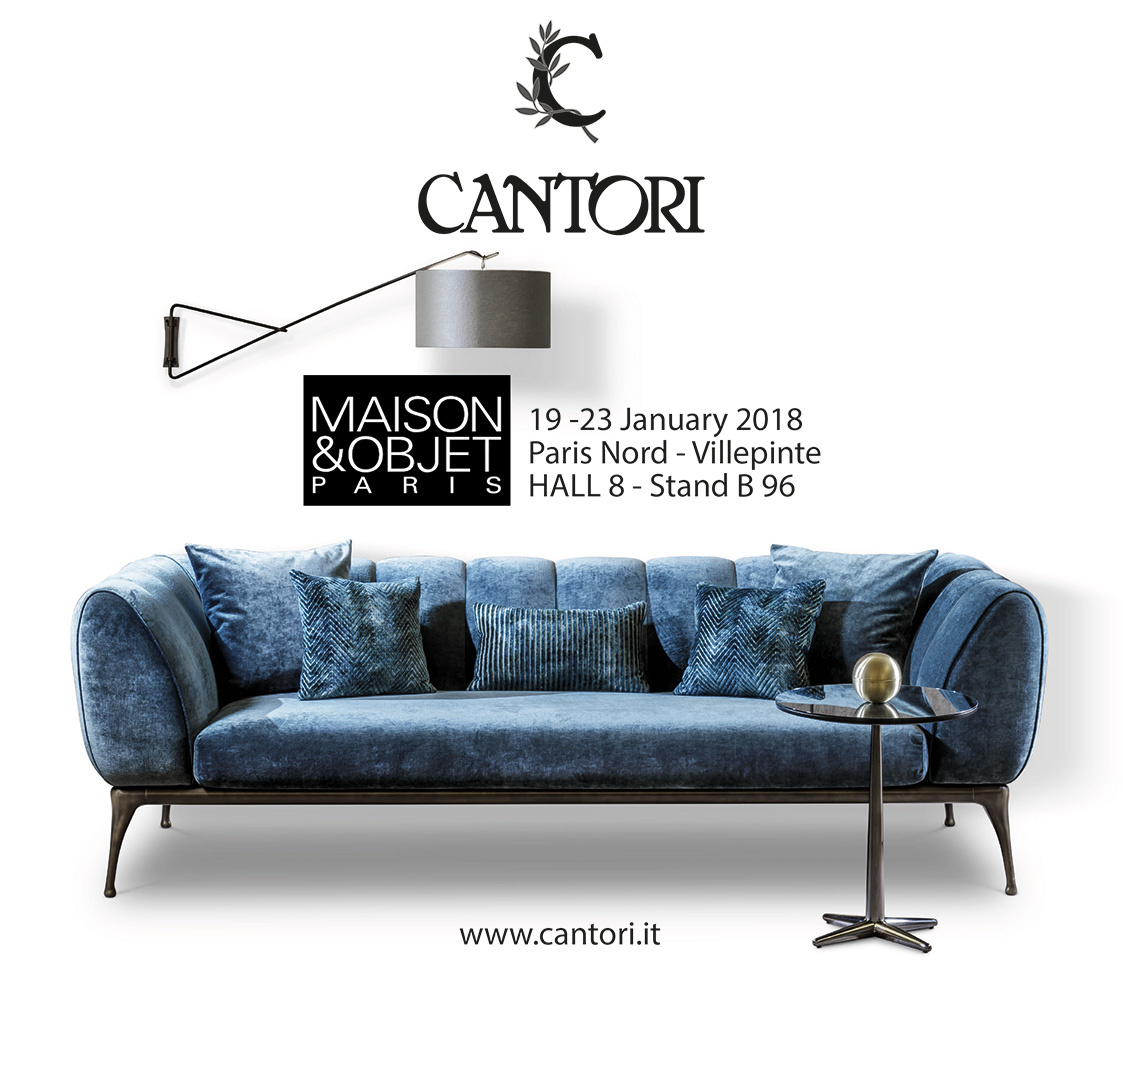 Cantori at Maison&Objet 2018 in Paris - Cantori